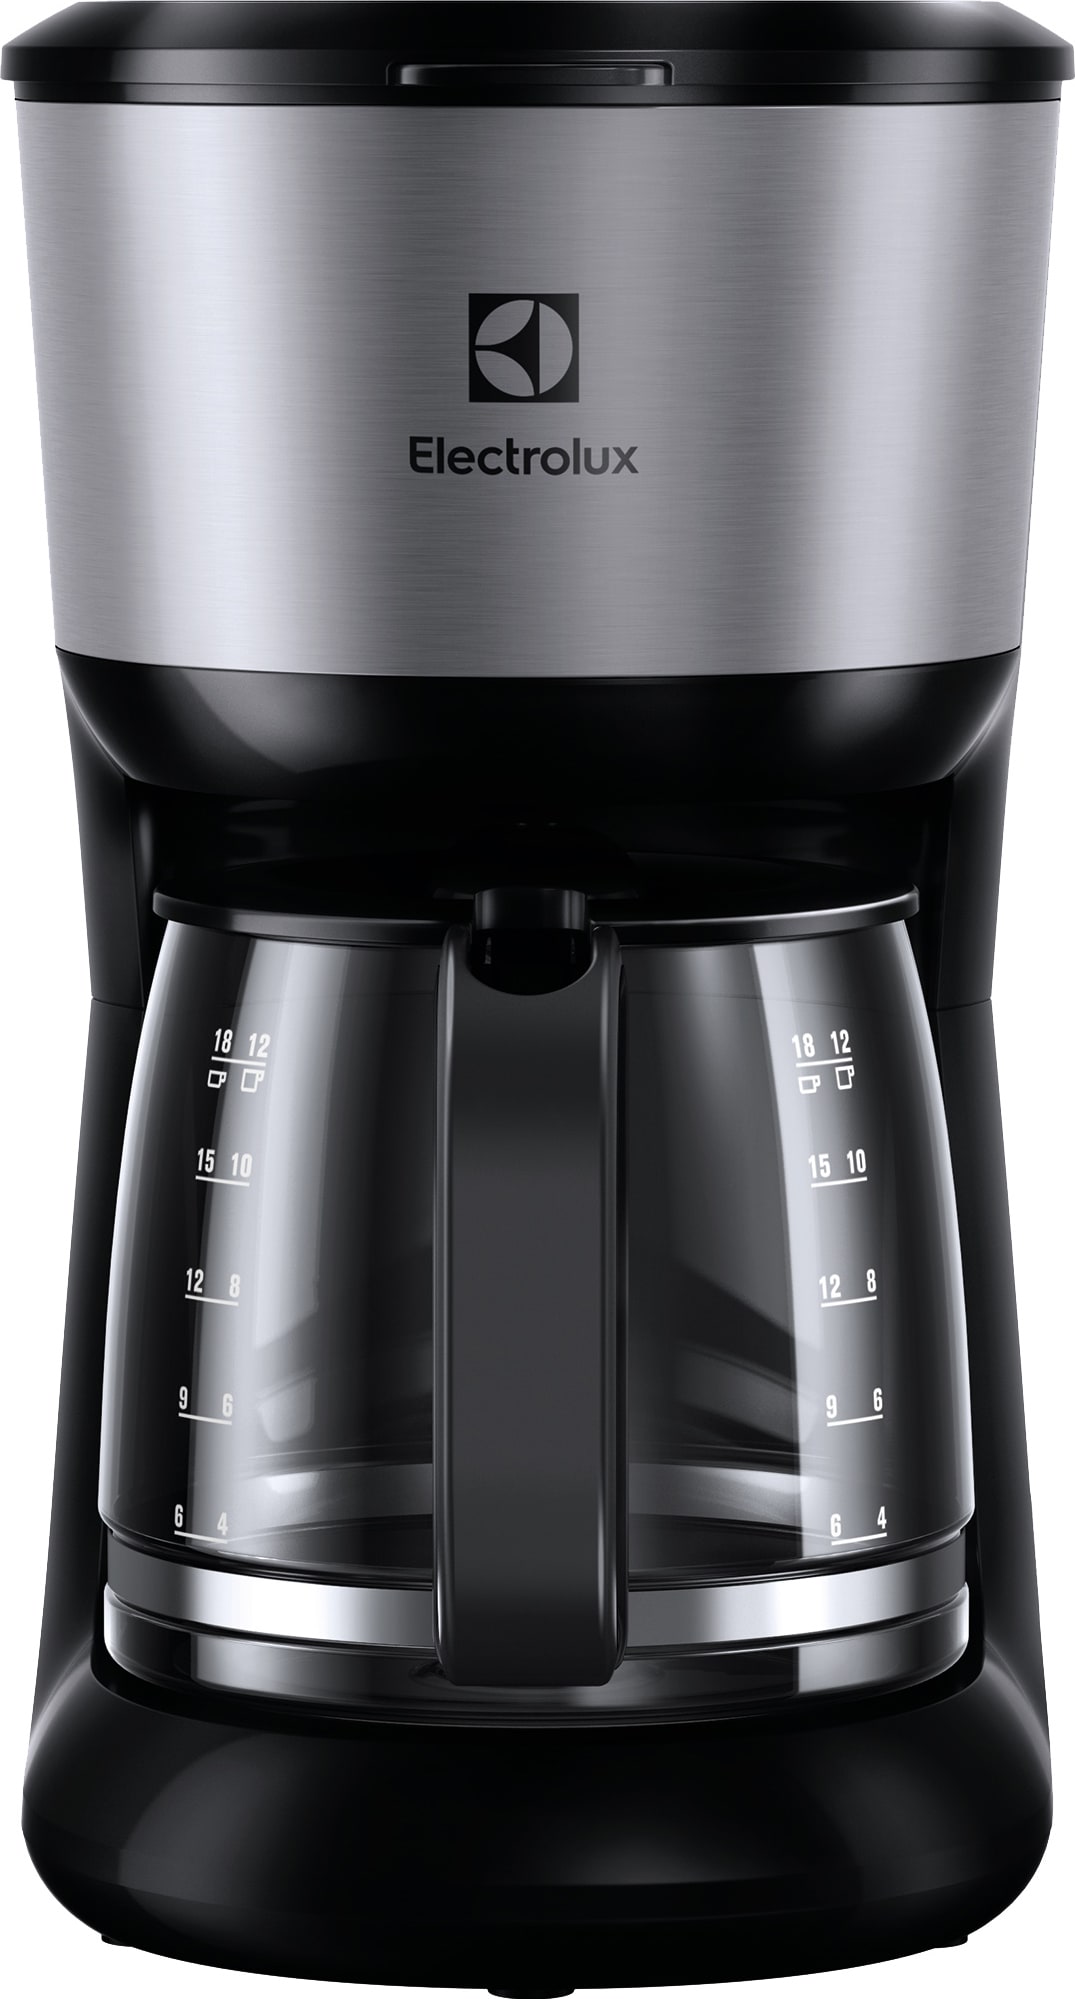 Køb Electrolux Love Your Day kaffemaskine EKF3700